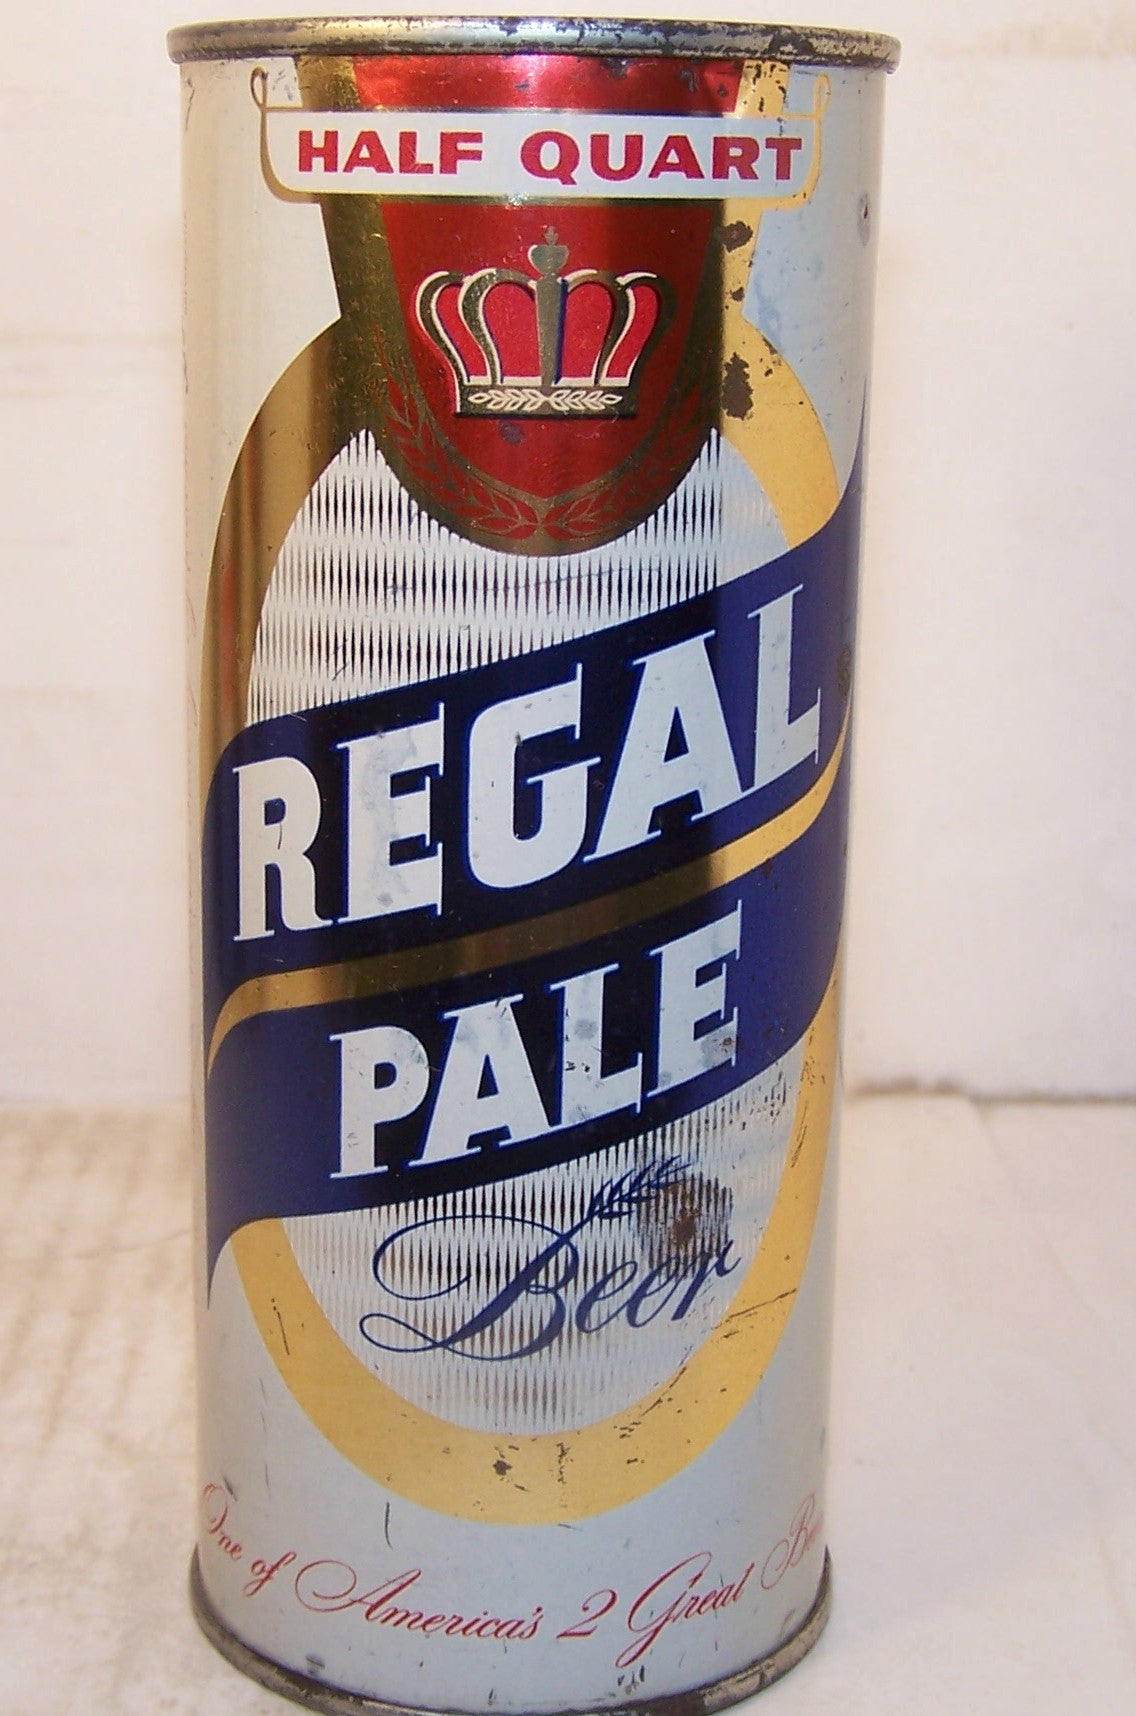 Regal Pale Beer, USBC 234-19, Grade 1- Sold on 2/11/15